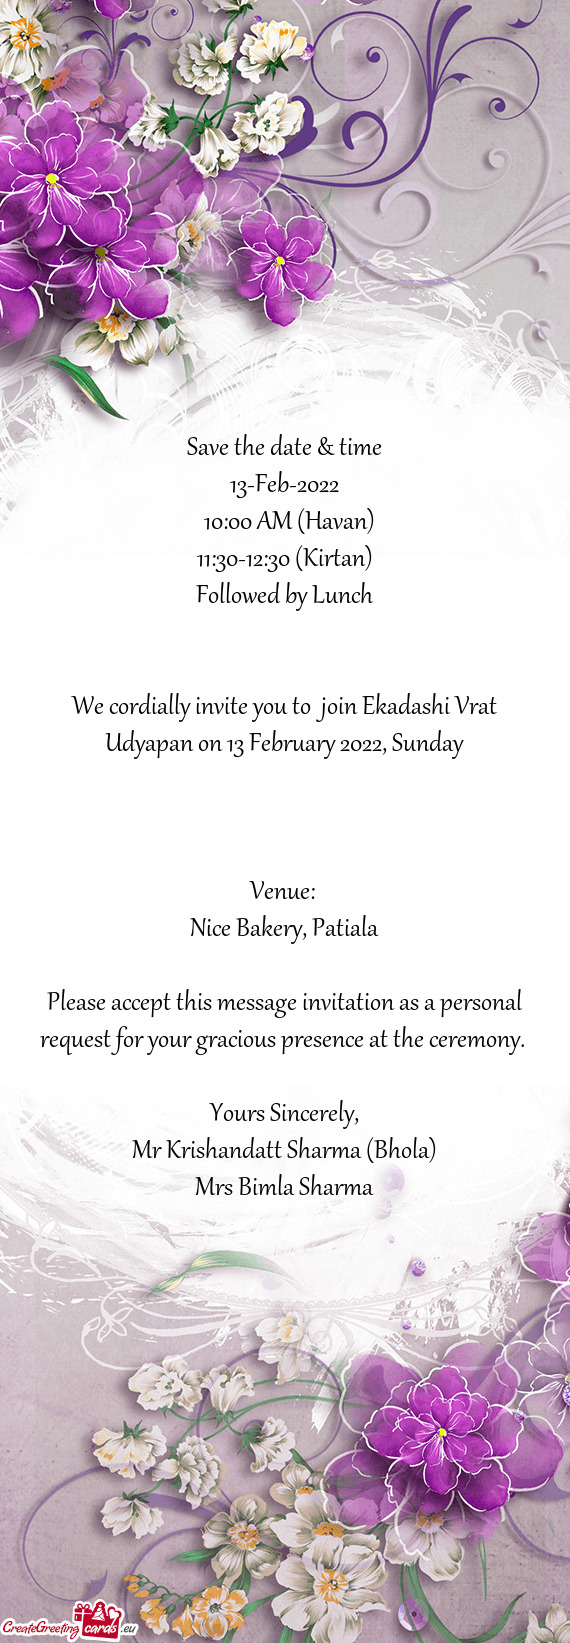 We cordially invite you to join Ekadashi Vrat Udyapan on 13 February 2022, Sunday